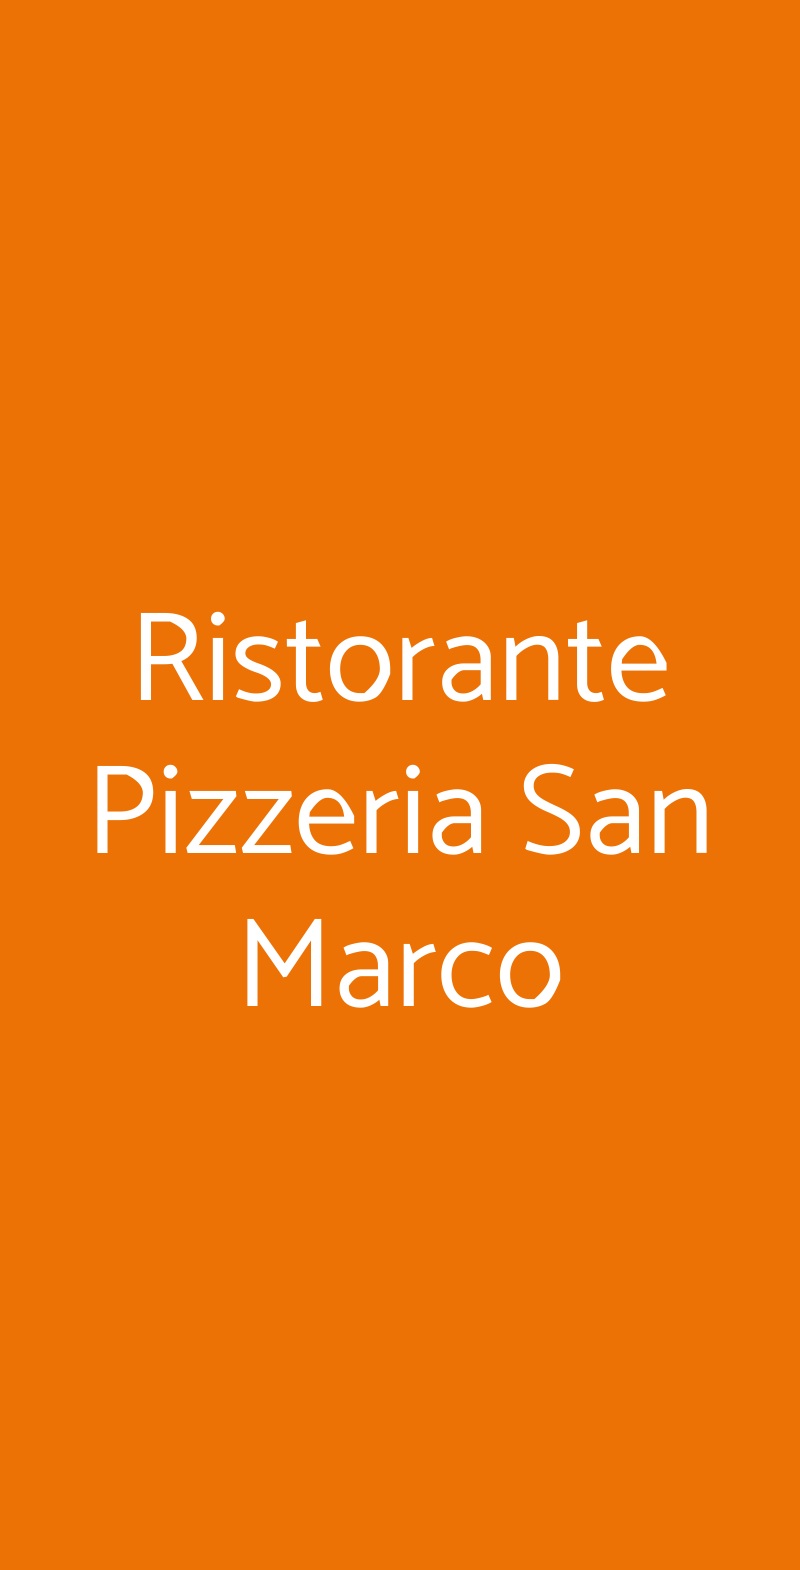 Ristorante Pizzeria San Marco Verona menù 1 pagina